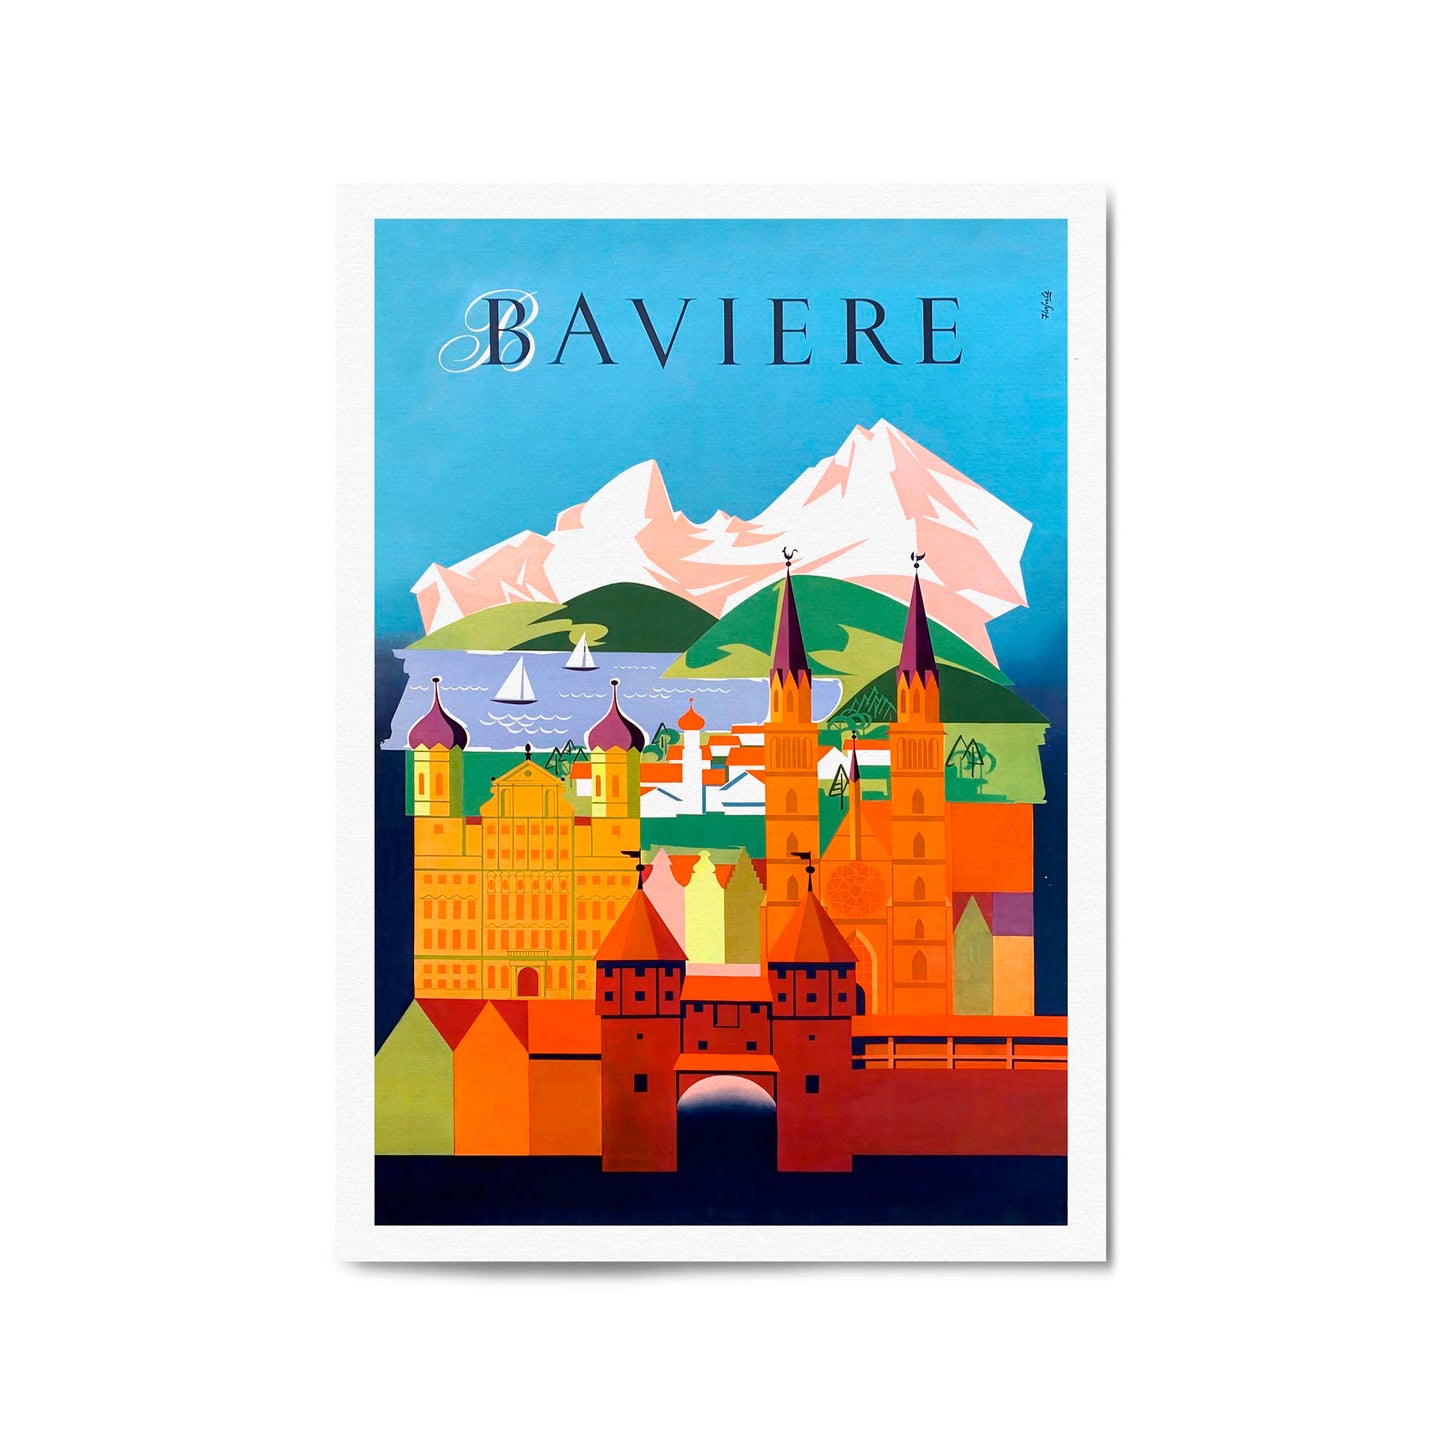 Bavaria, Germany "Baviere" by Franz Hahnle | Framed Vintage Travel Poster